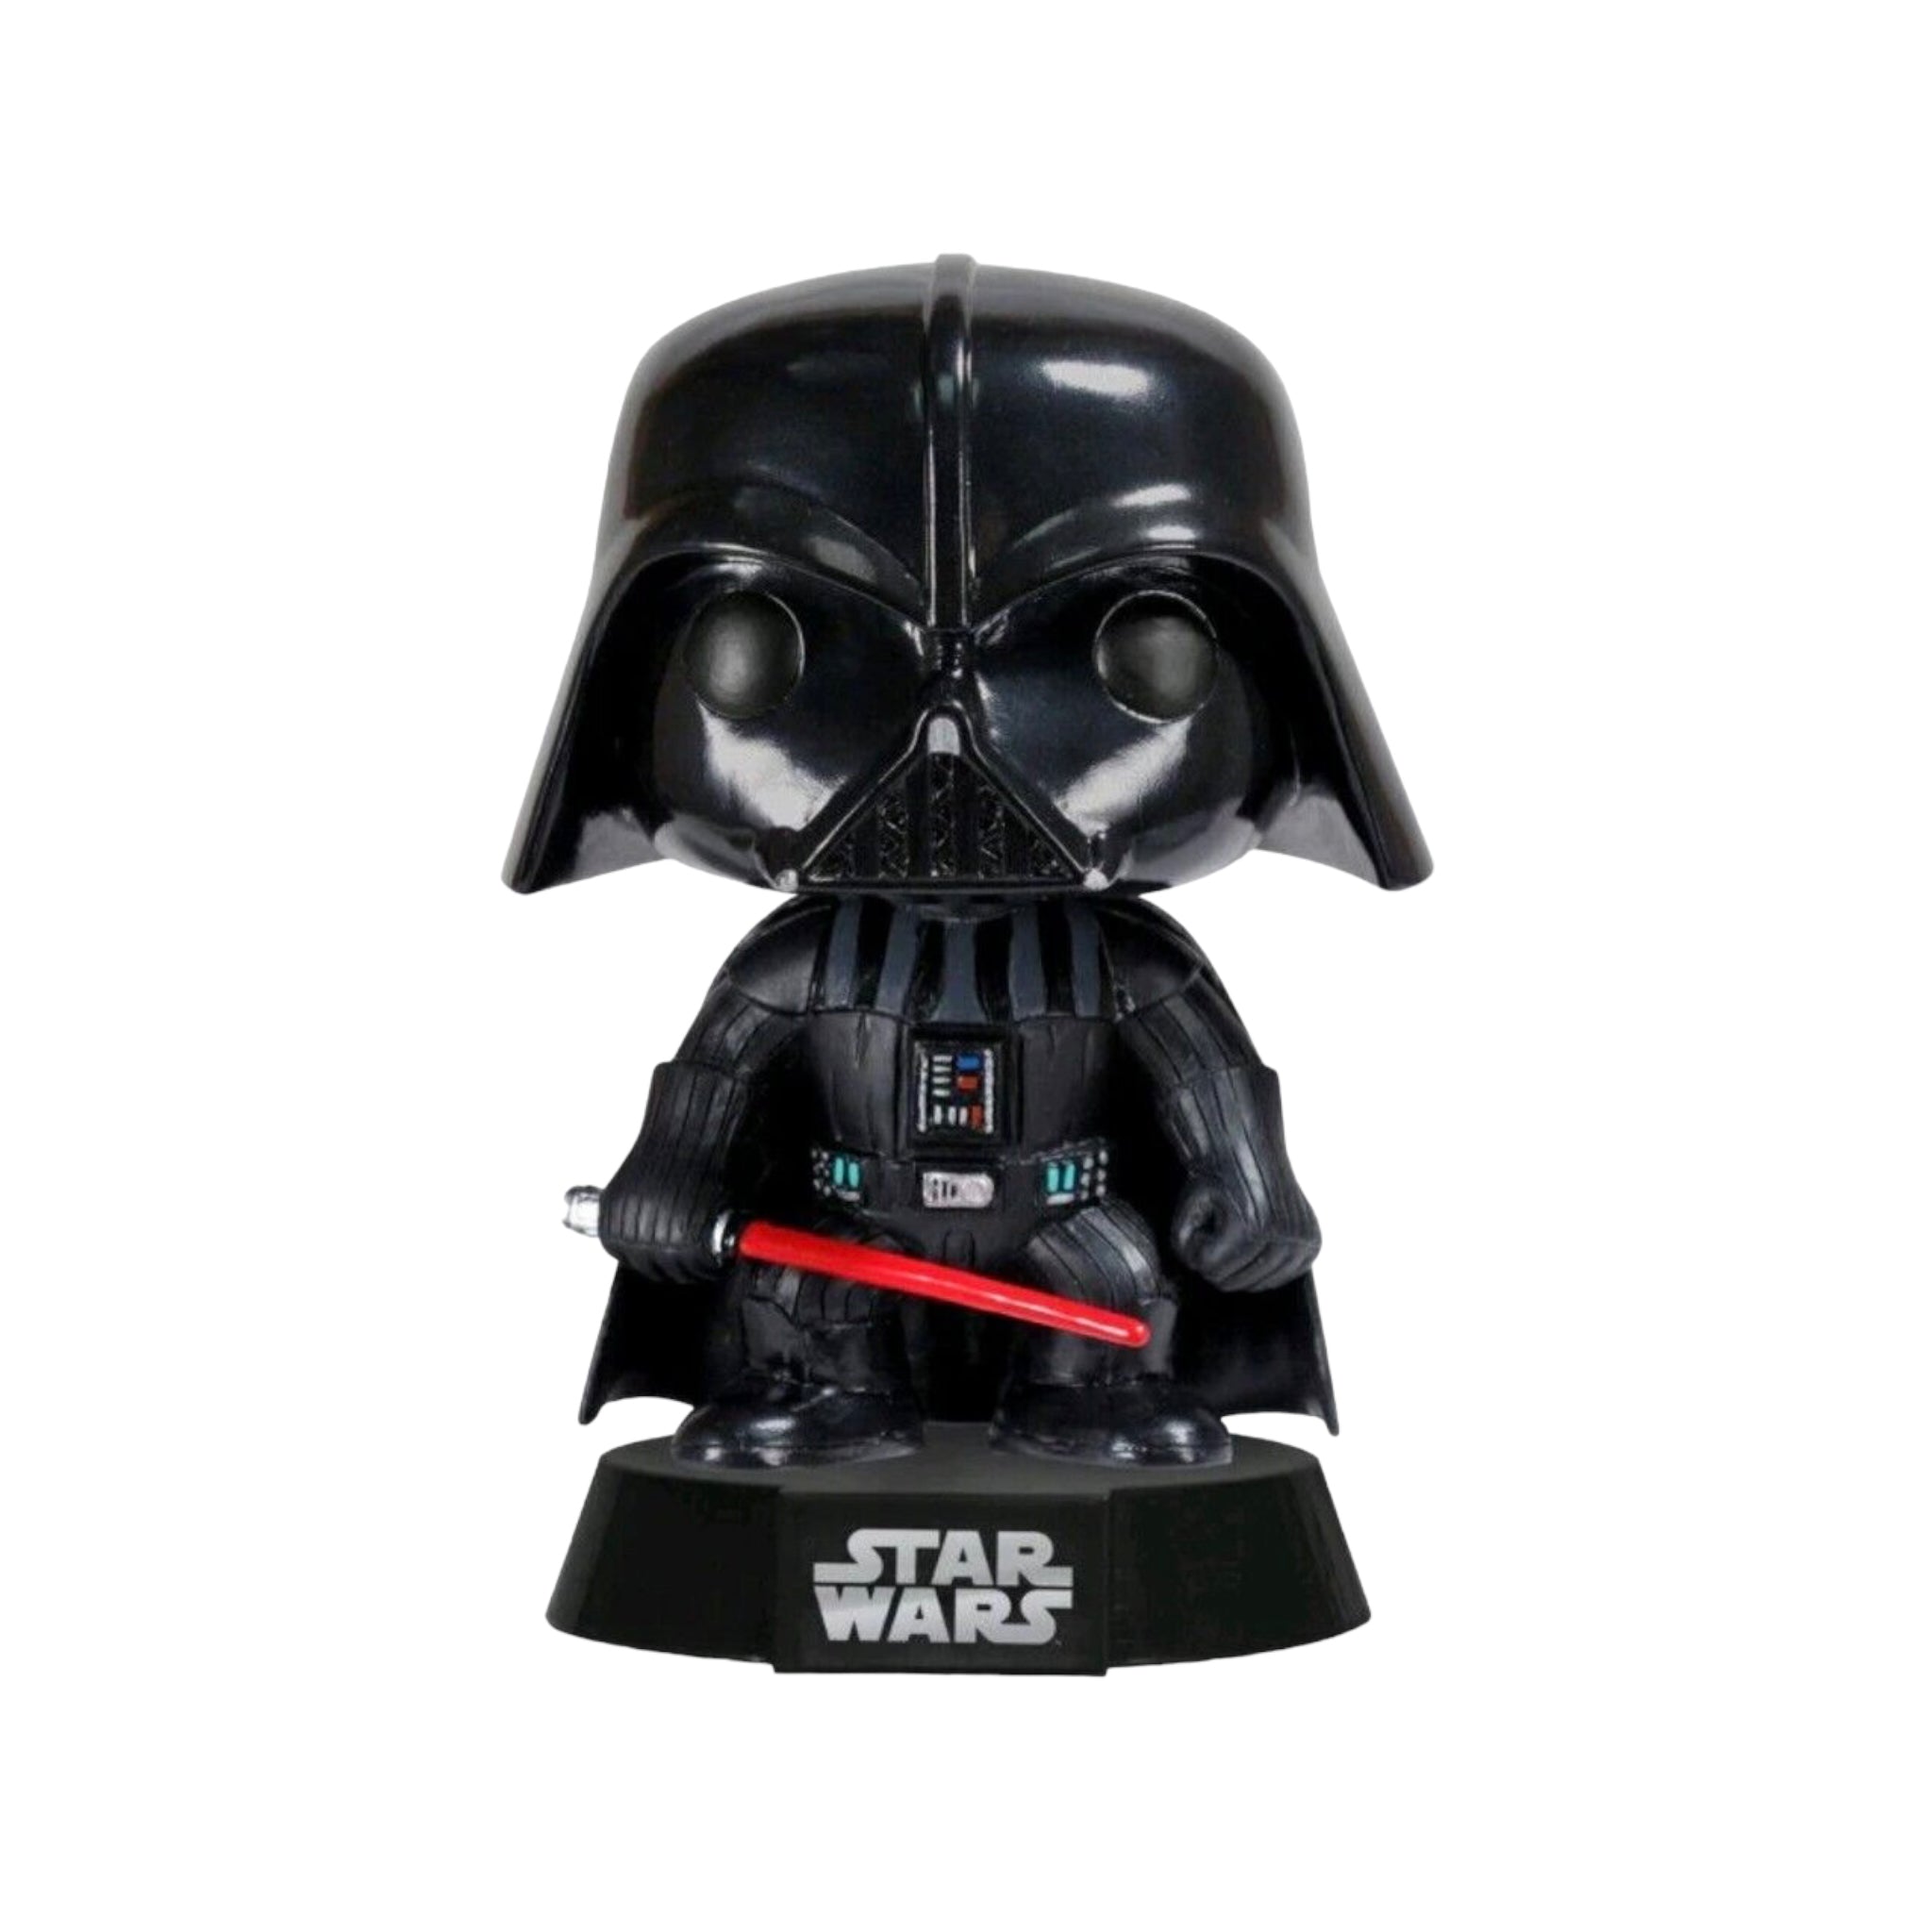 Darth Vader #01 Funko Pop! - Star Wars